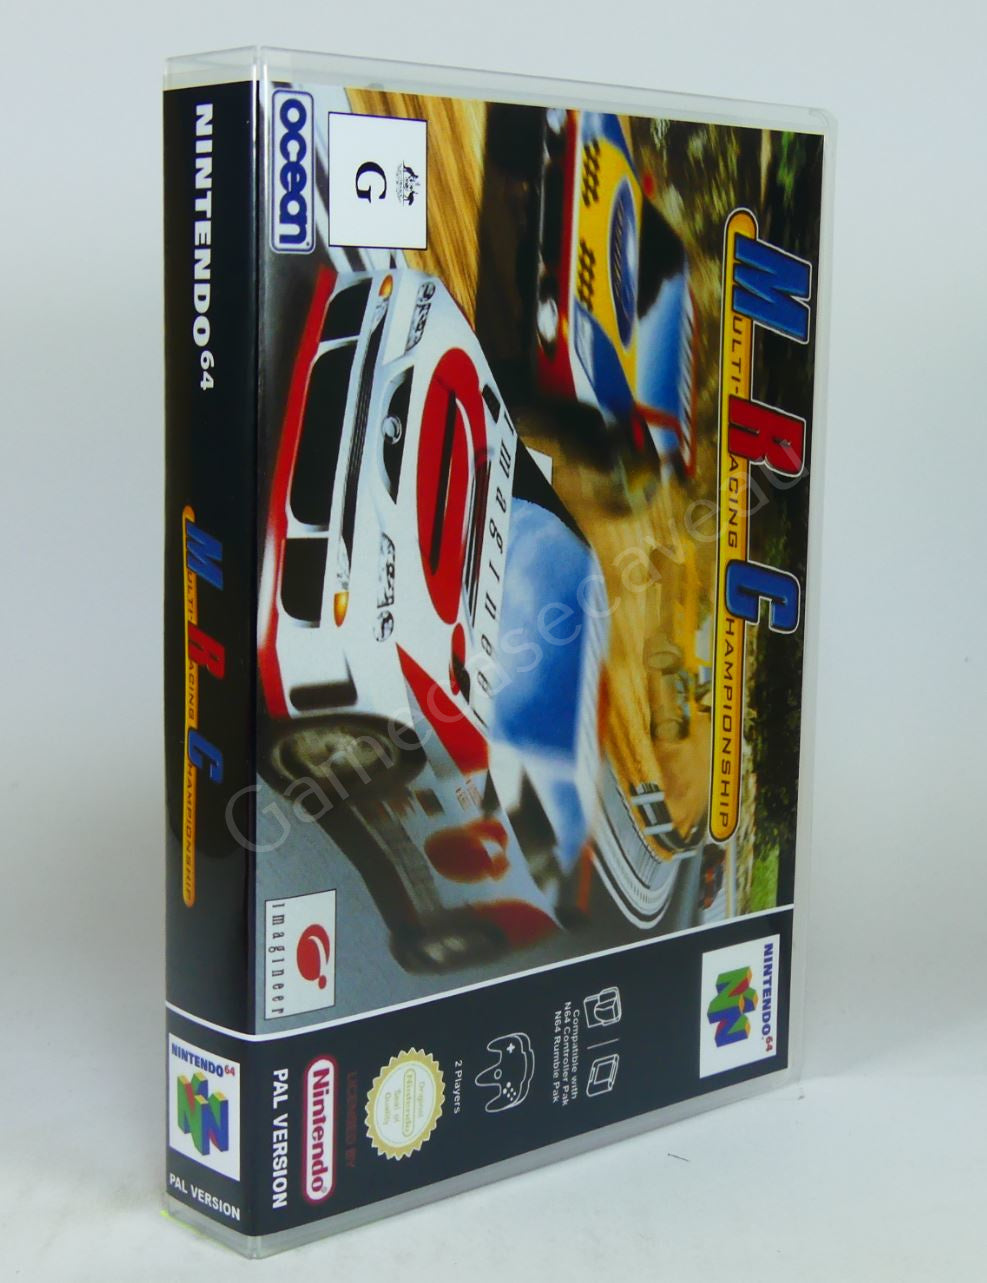 MRC Multi Racing Championship - N64 Replacement Case